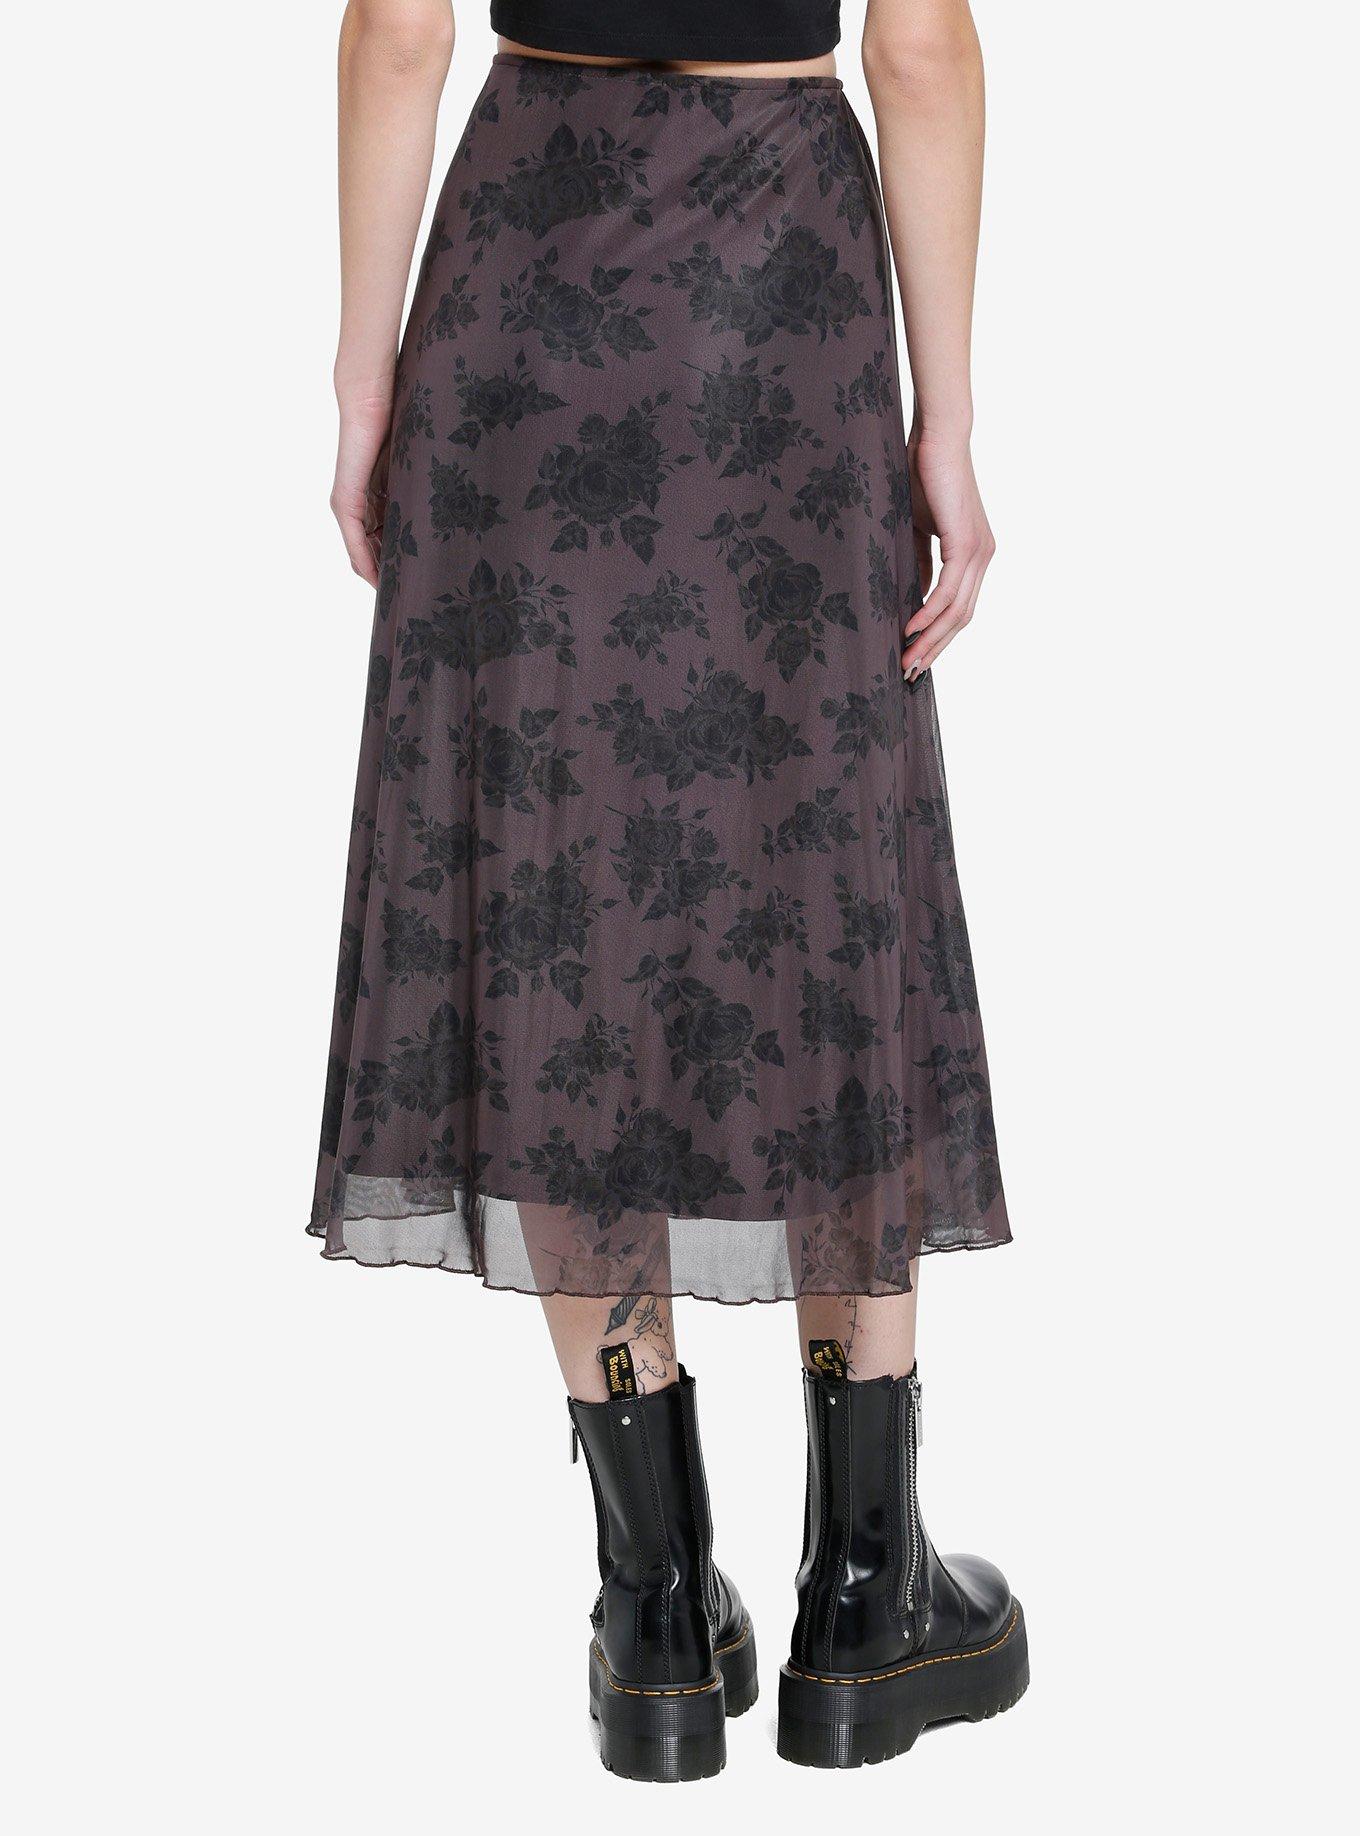 Social Collision Brown Floral Midi Skirt, FLORAL, alternate